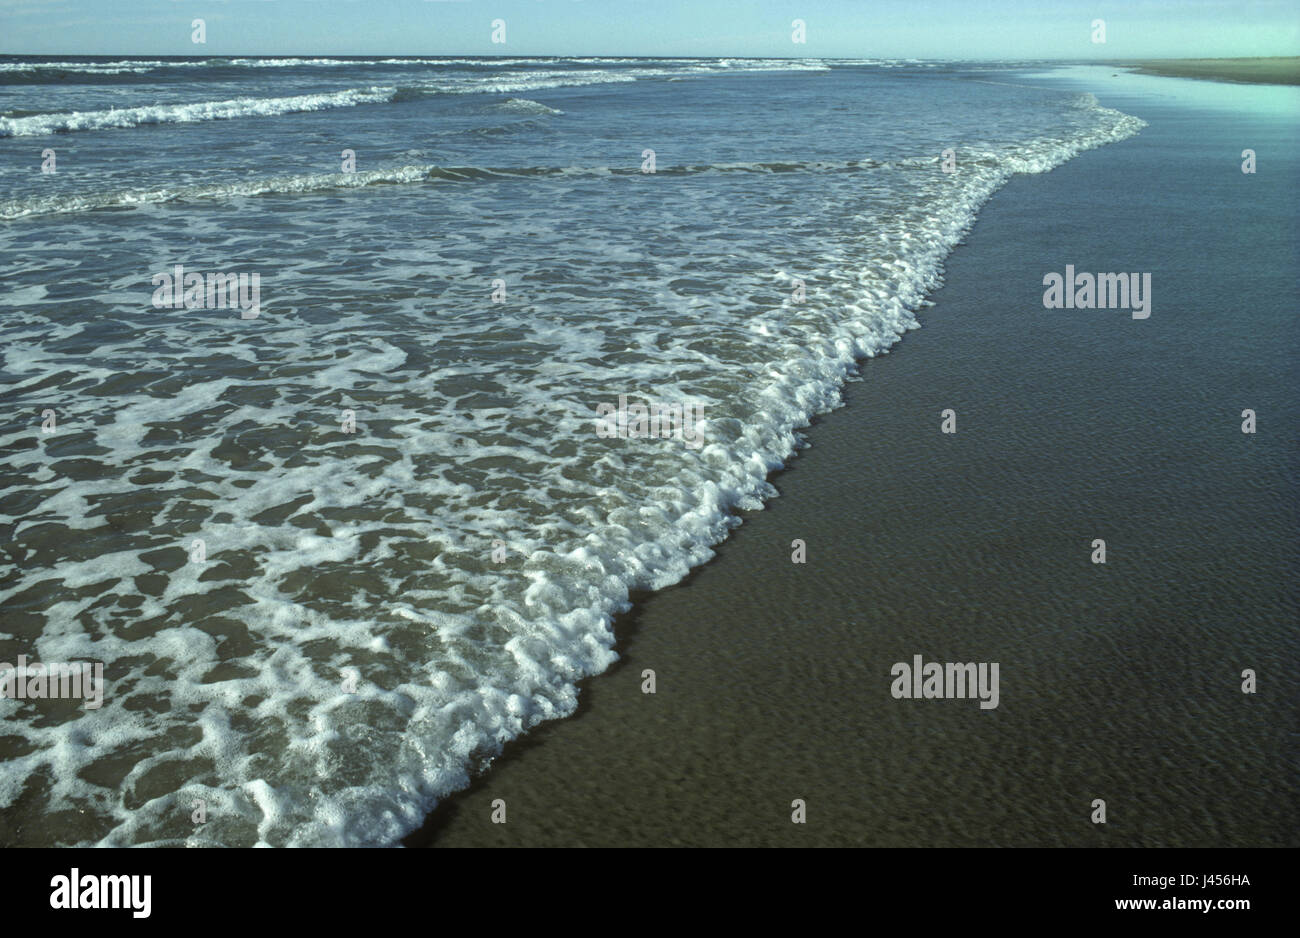 Gentle breaking waves on a sandy beach in the UK Stock Photo